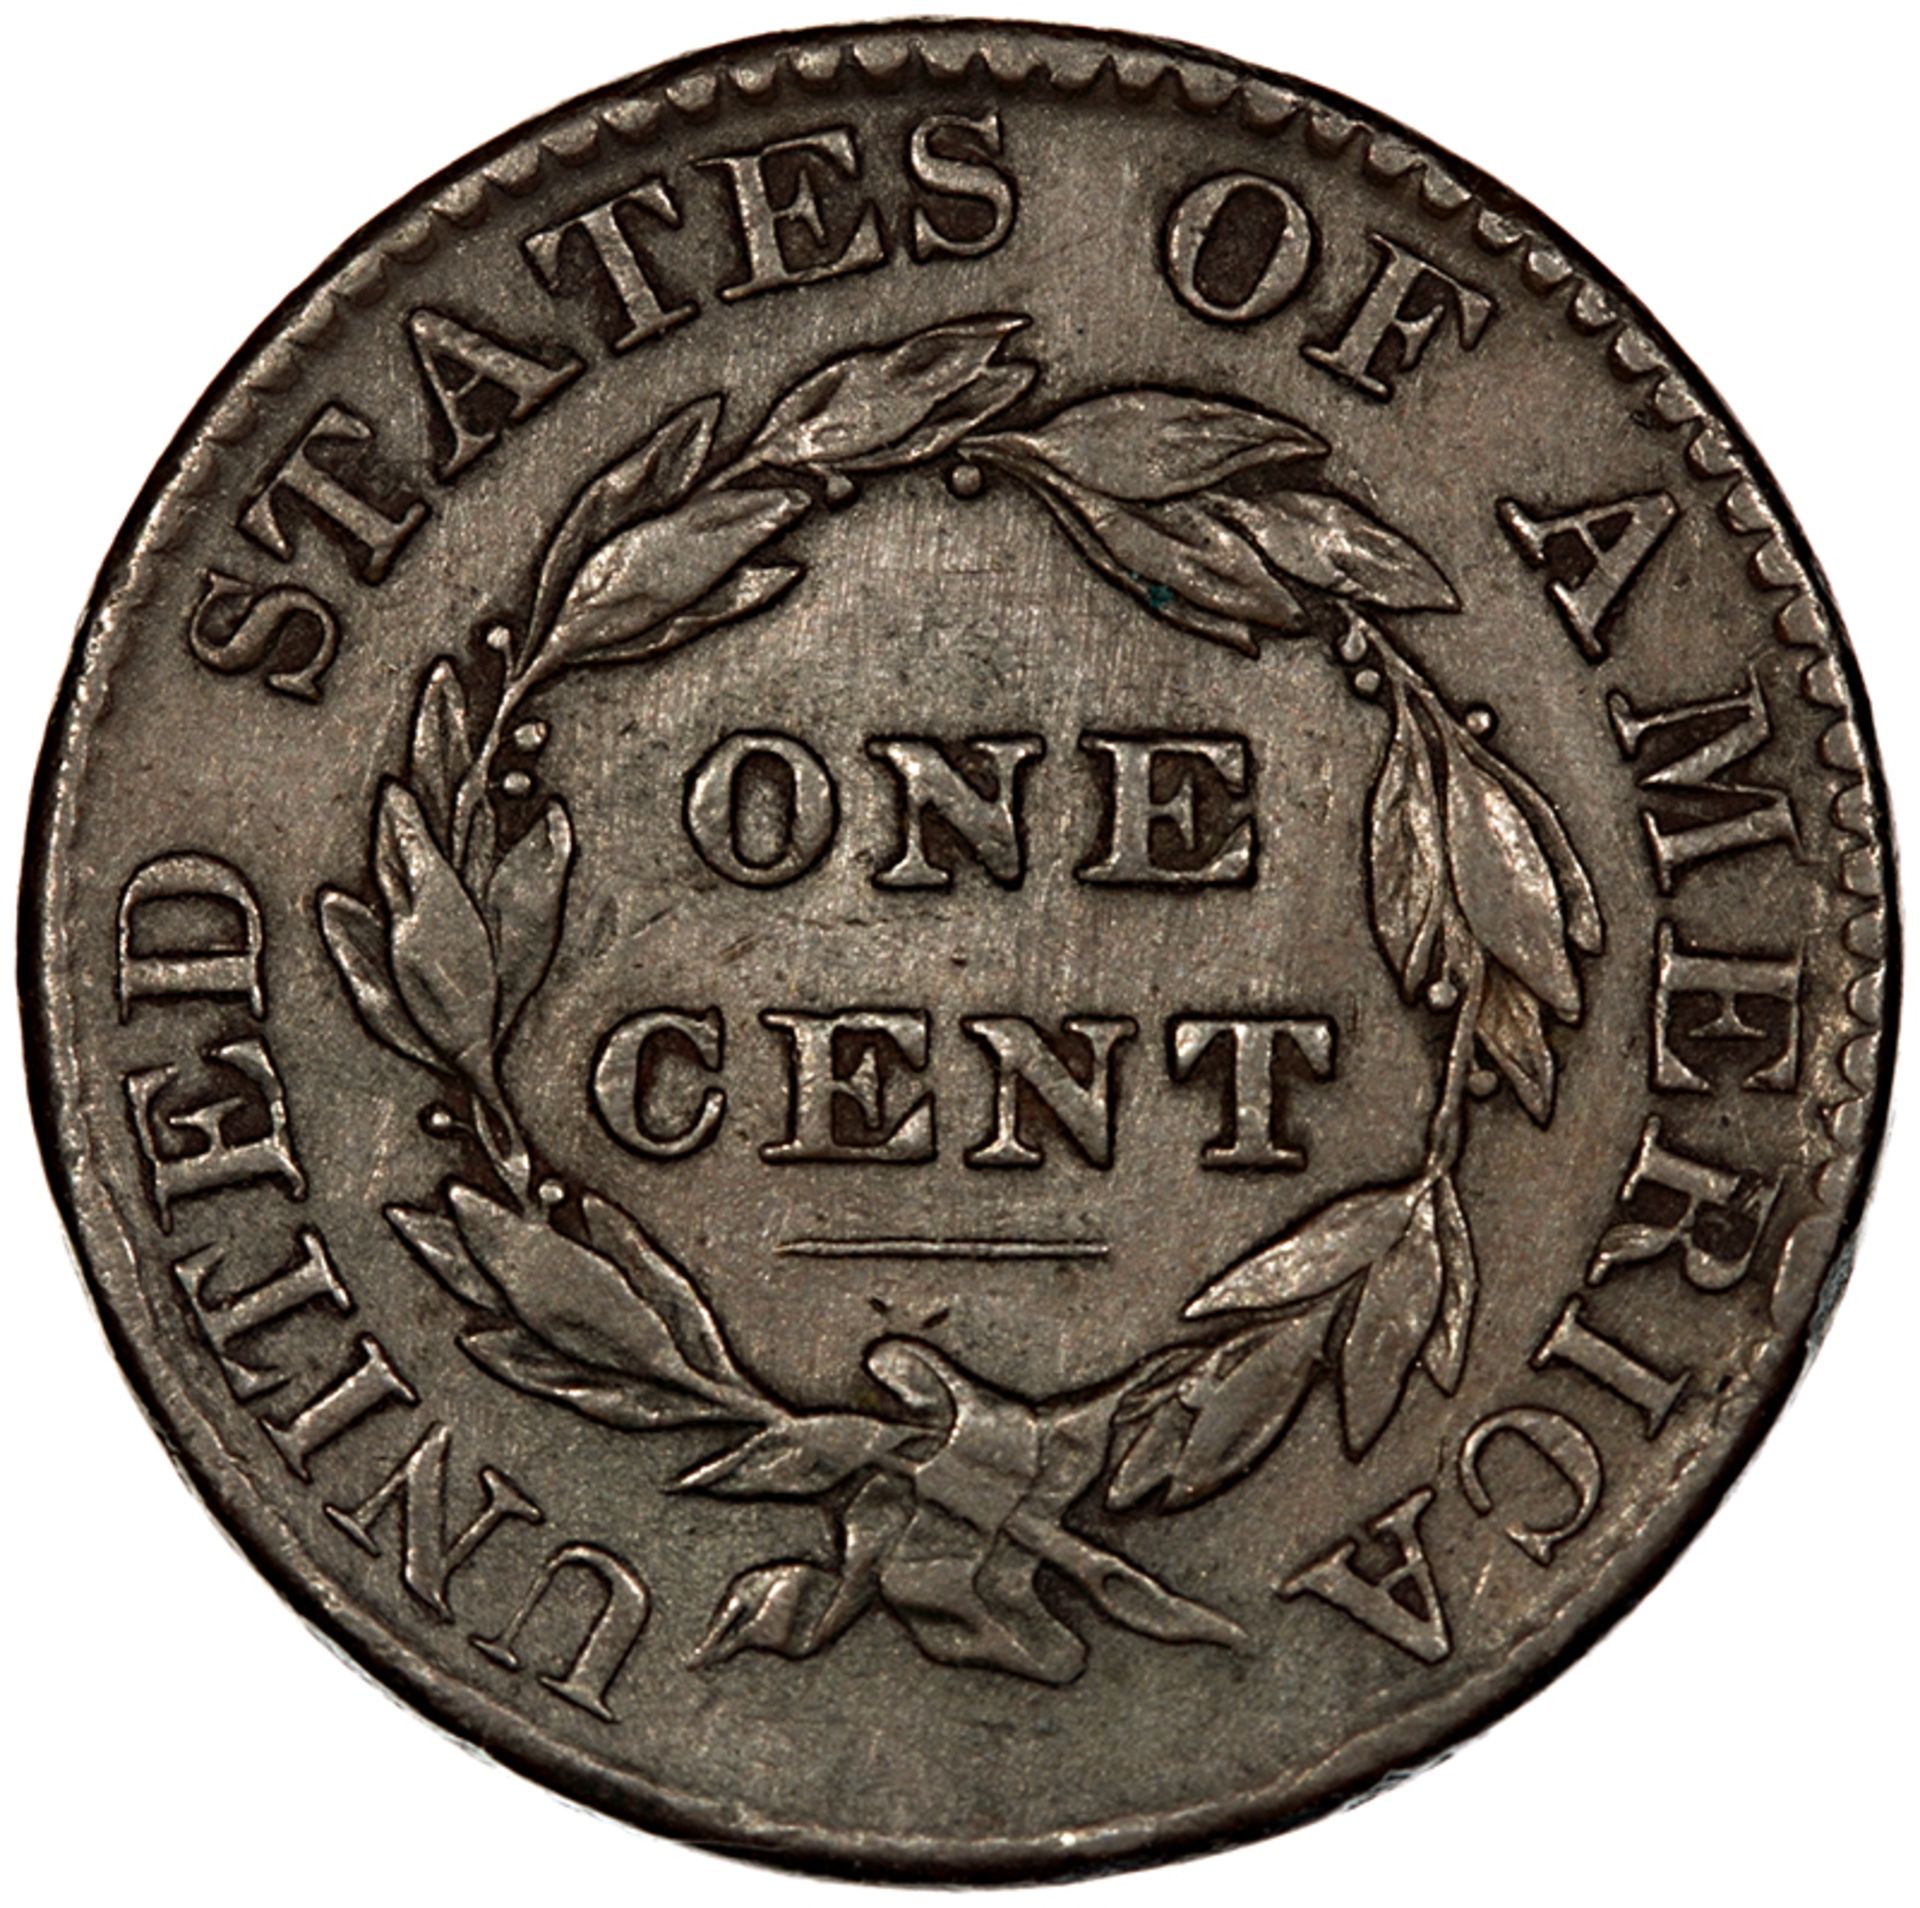 USA - Coronet Cent 1824, - Image 2 of 2